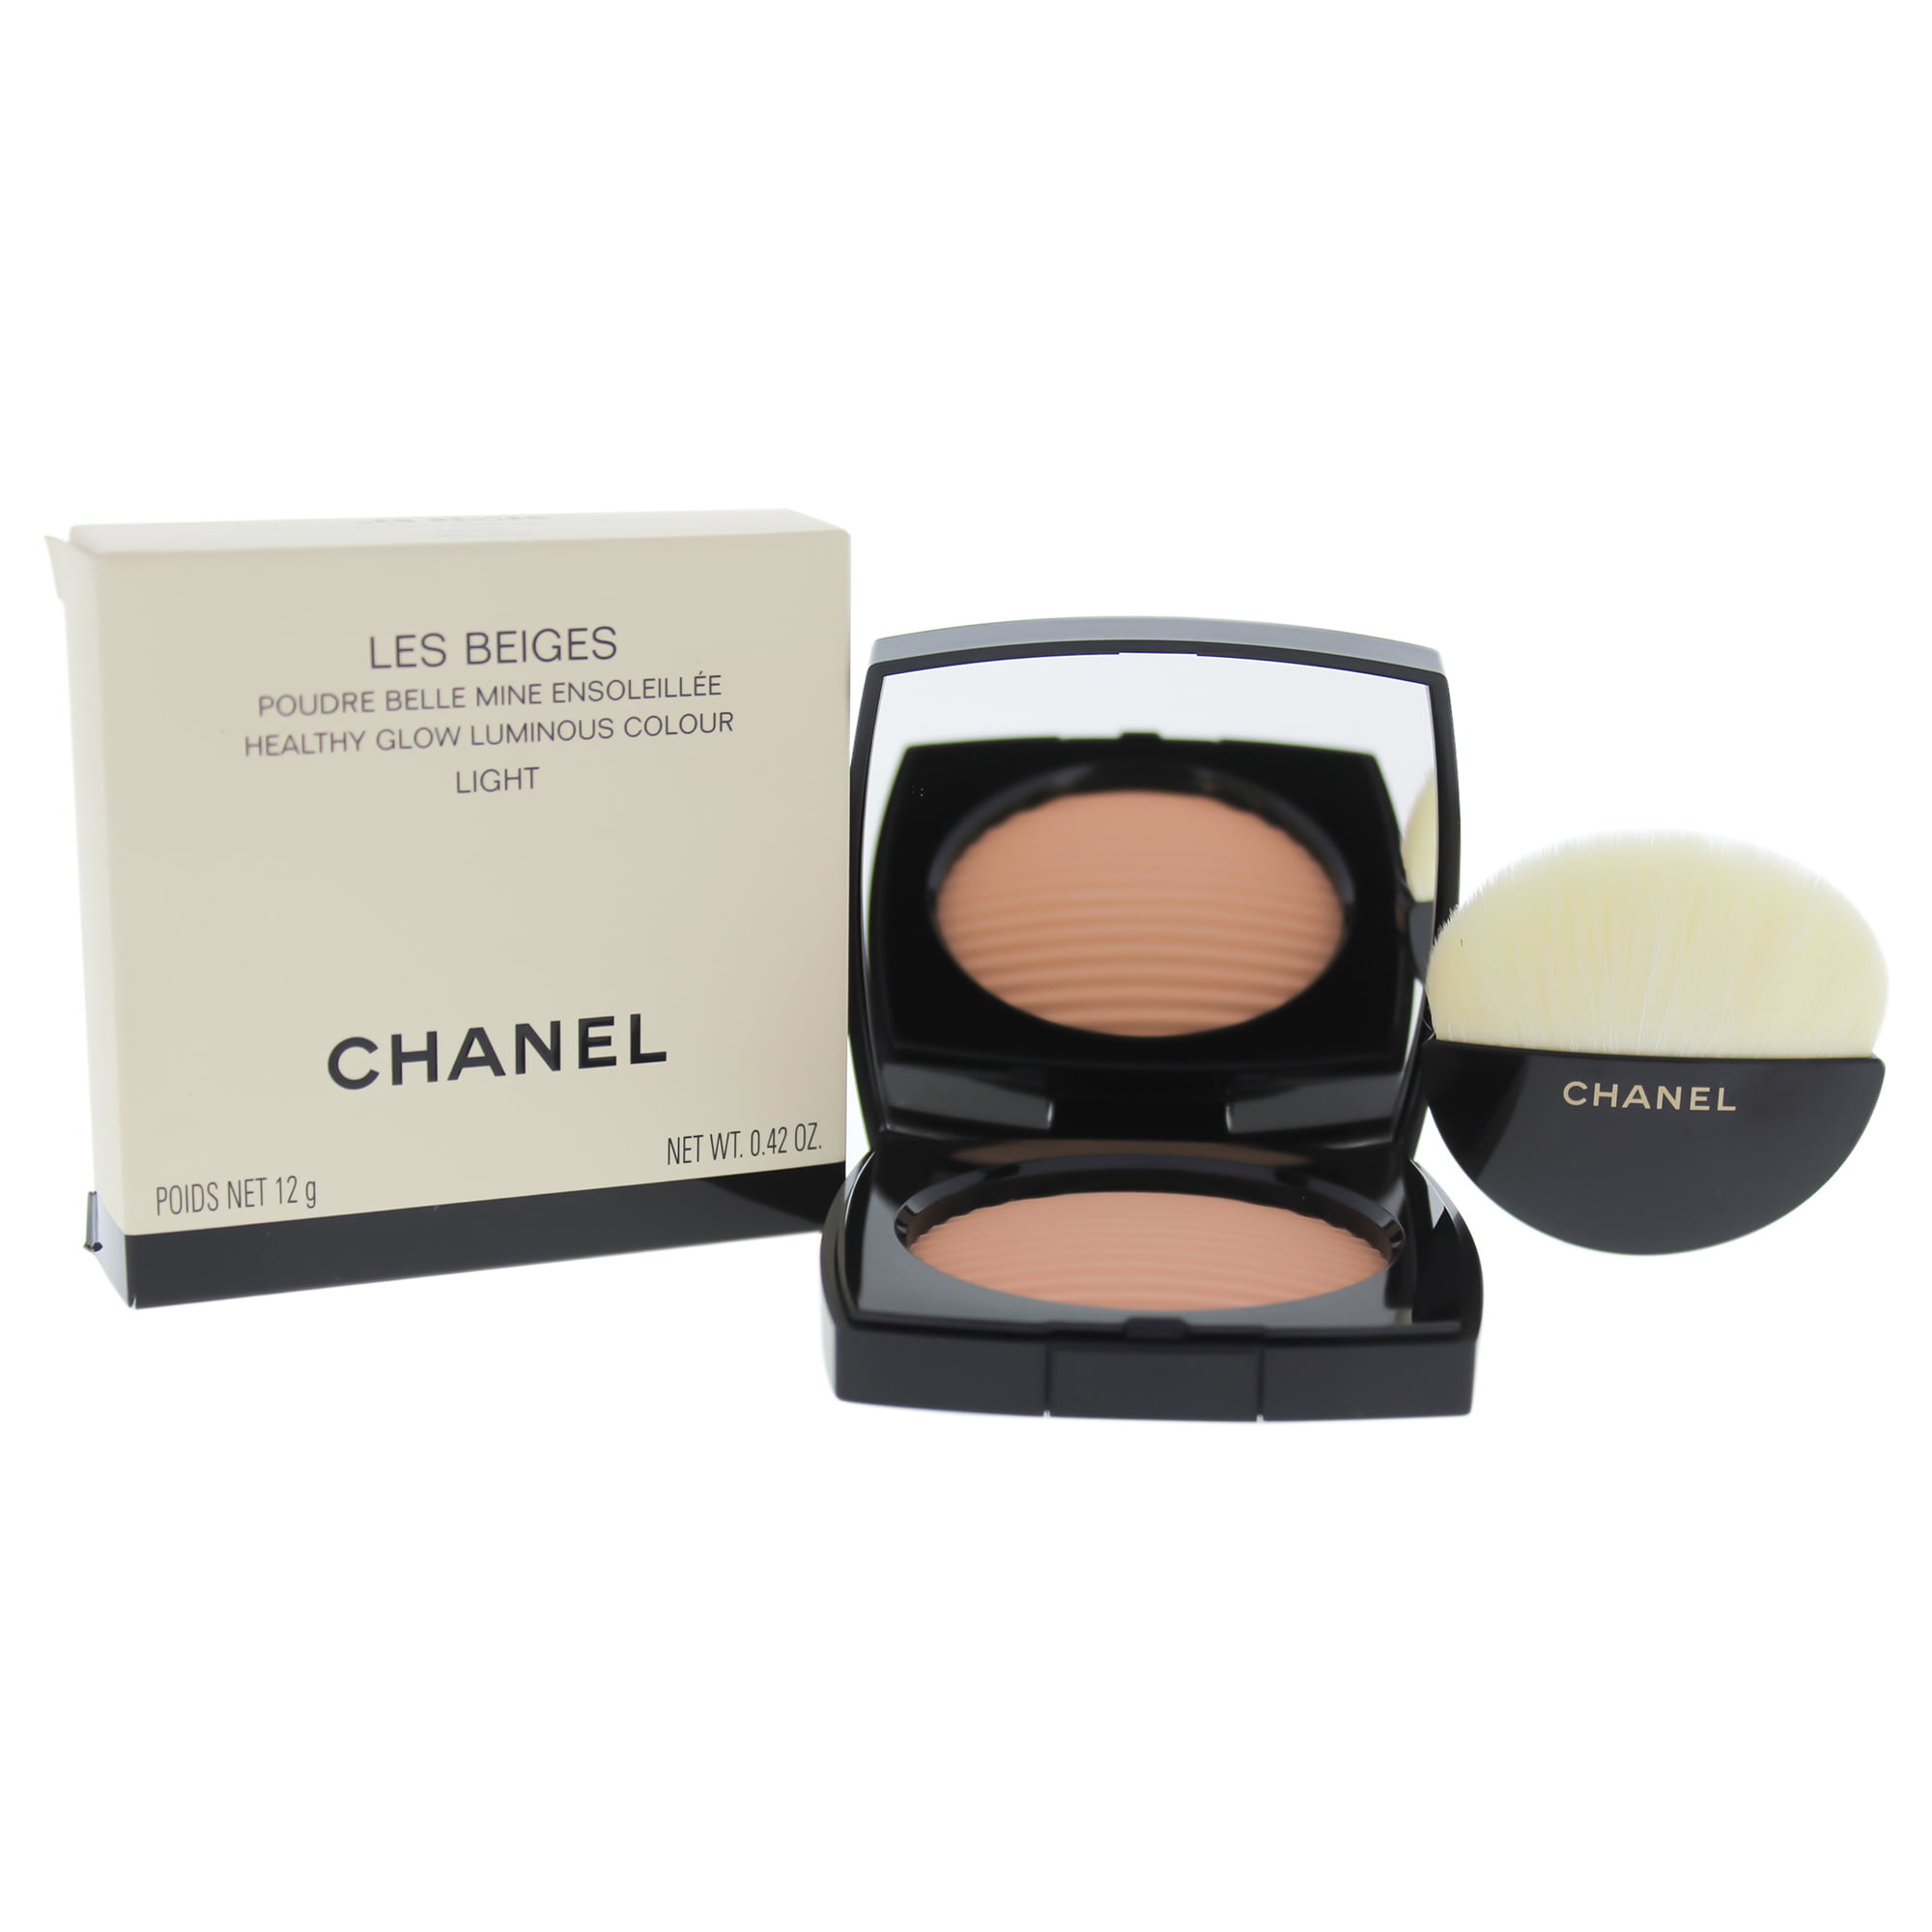 Les Beiges Healthy Glow Luminous Colour - Light by Chanel for Women - 0.42  oz Bronzer